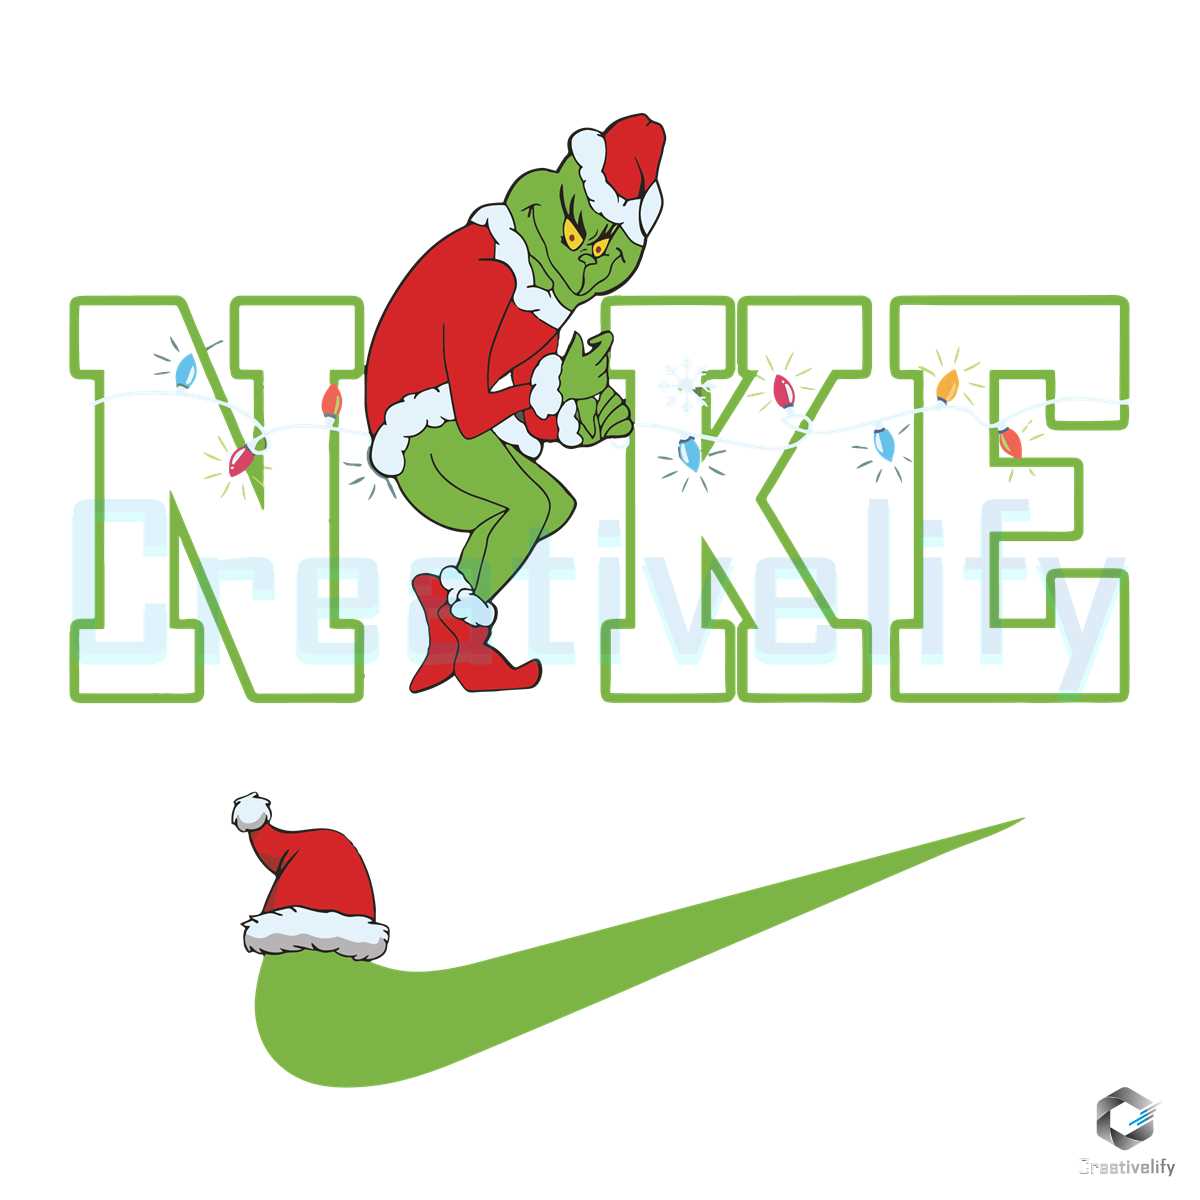 Nike The Grinch SVG, Christmas Grinch Nike SVG